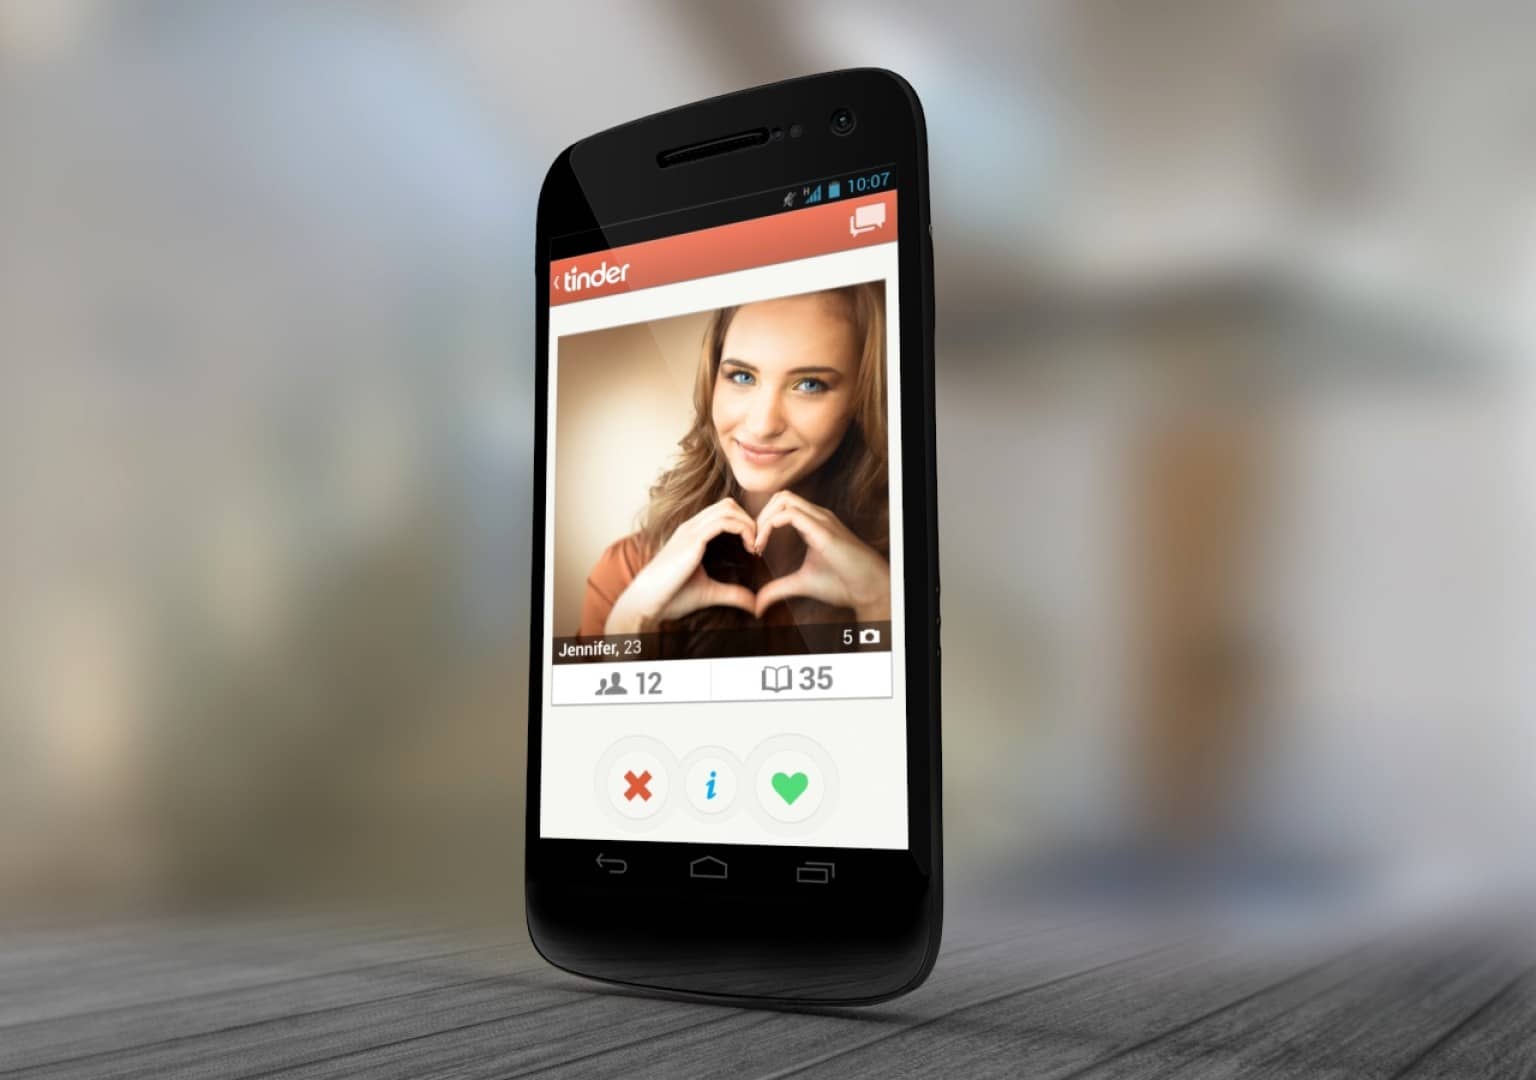 tinder-dating-app